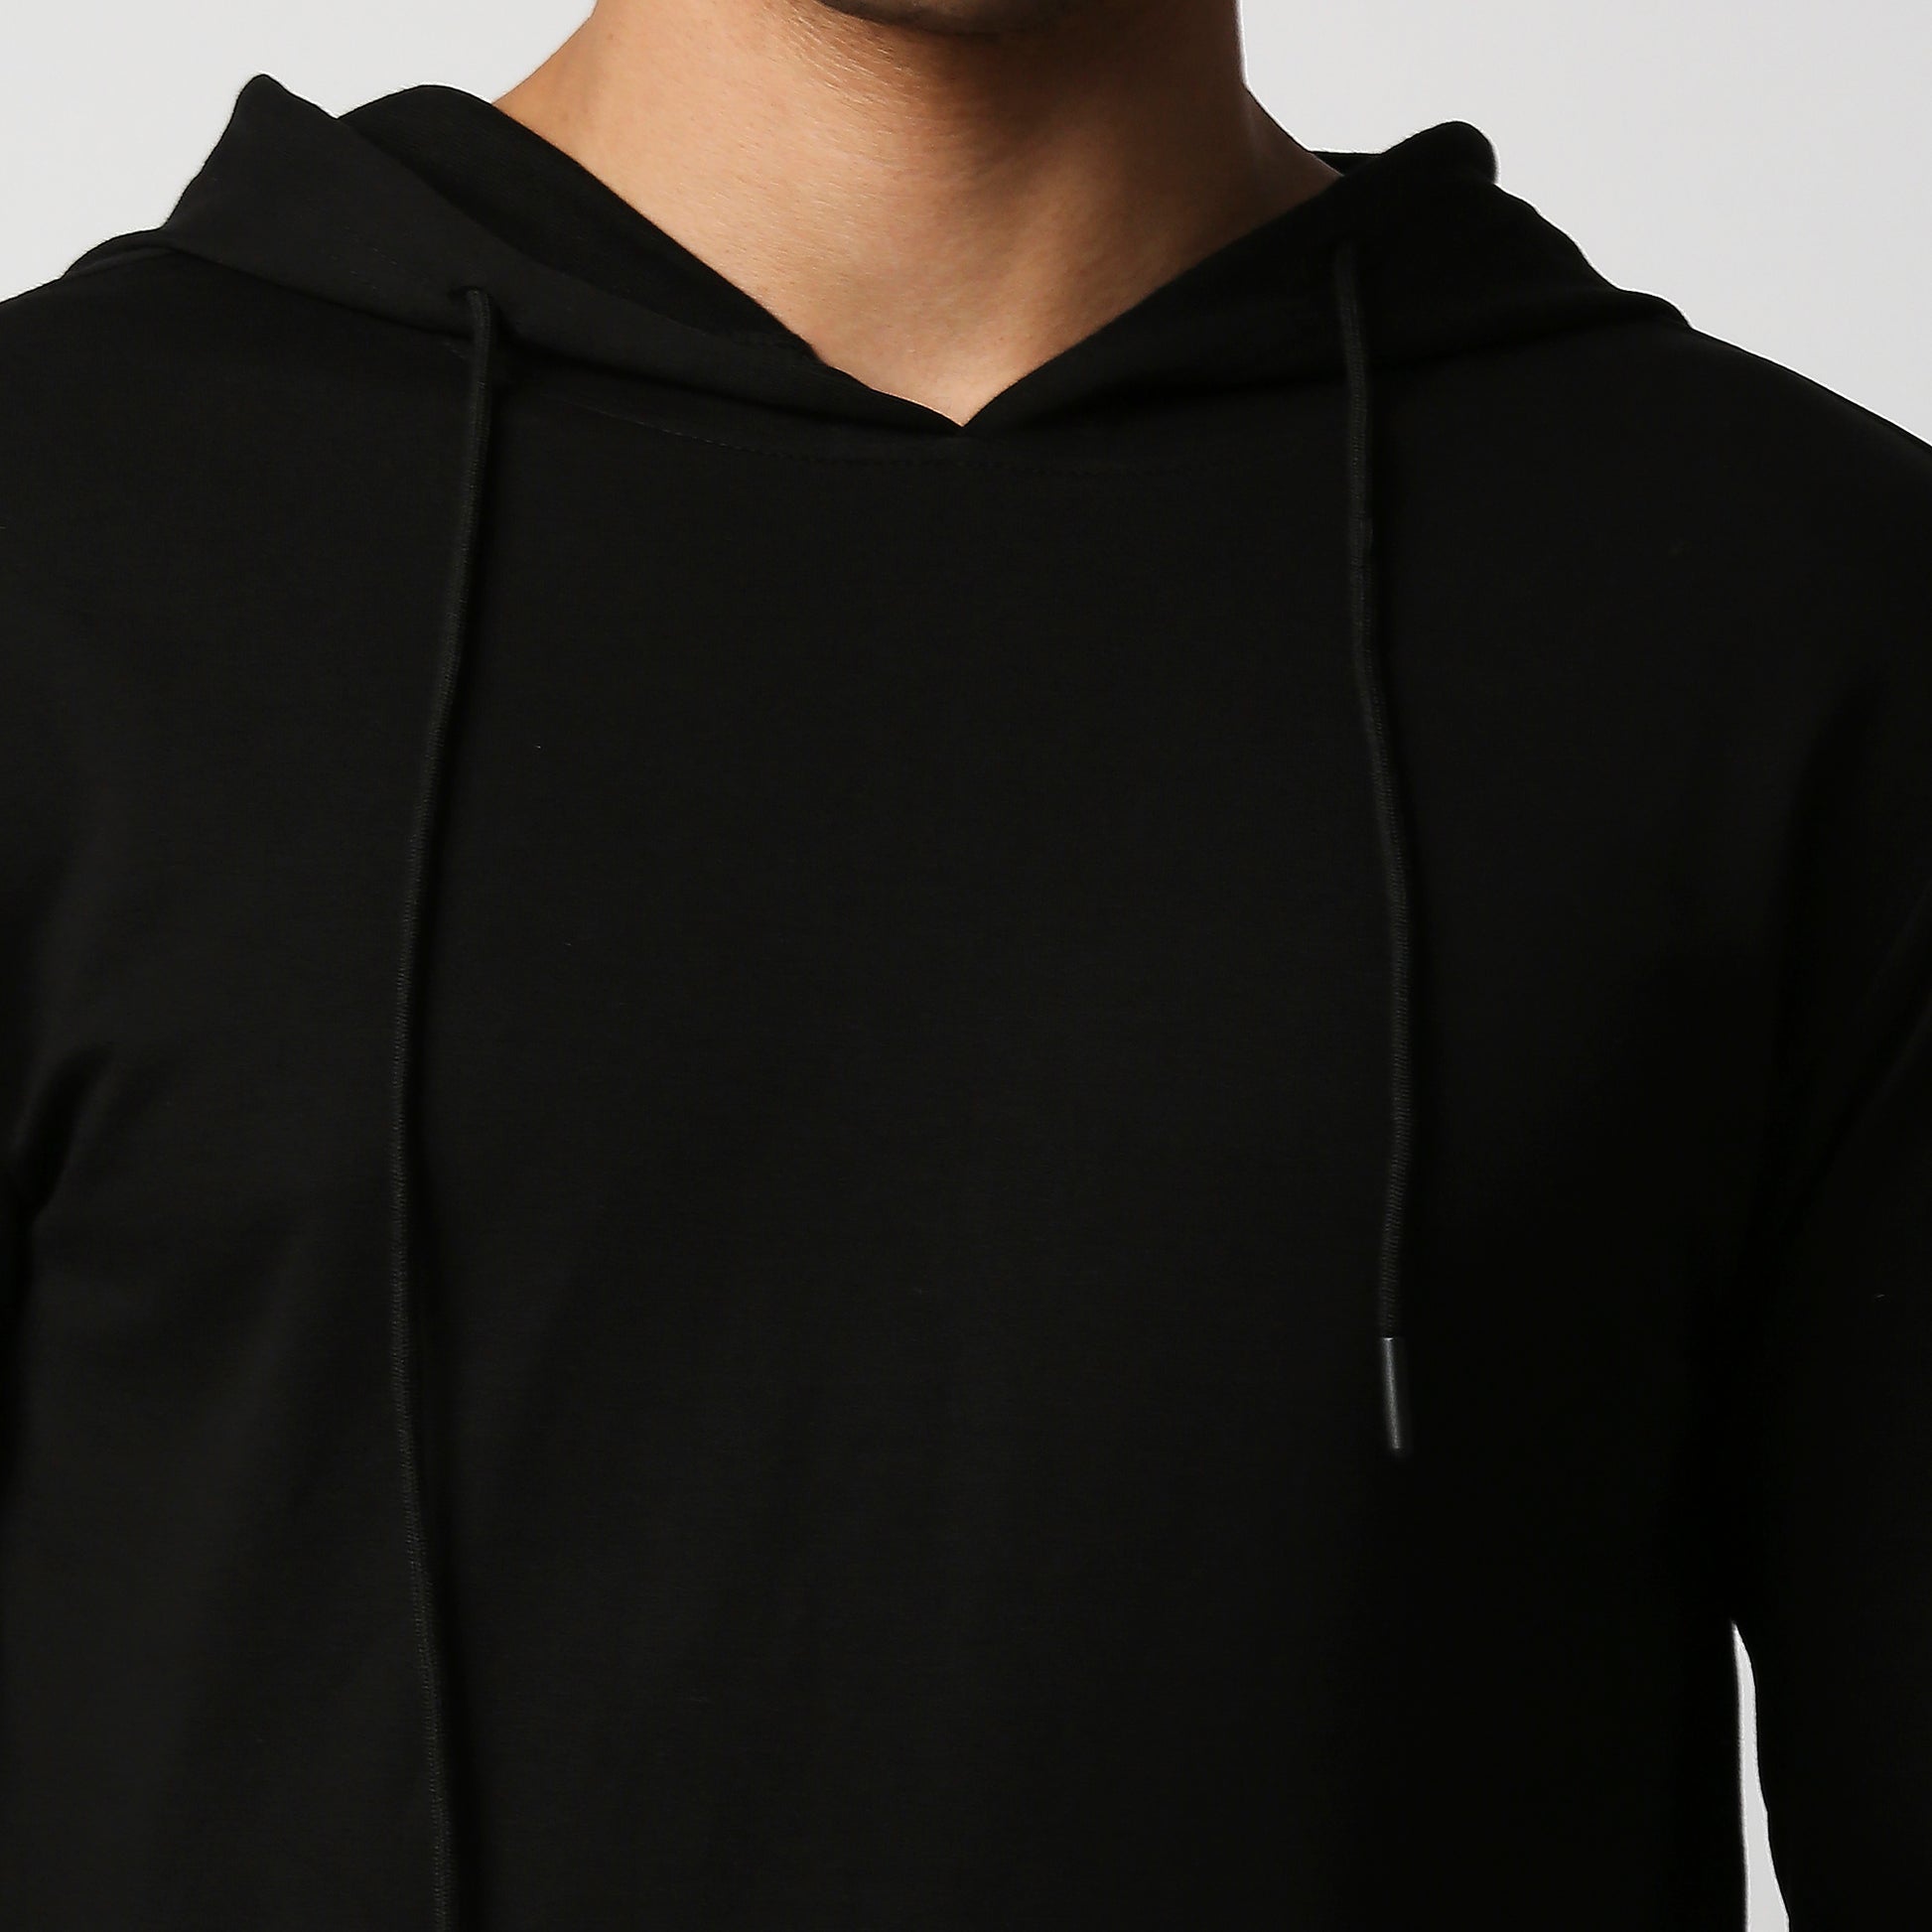 Fostino Black Plain Full Sleeves Hoodies - Fostino Shorts